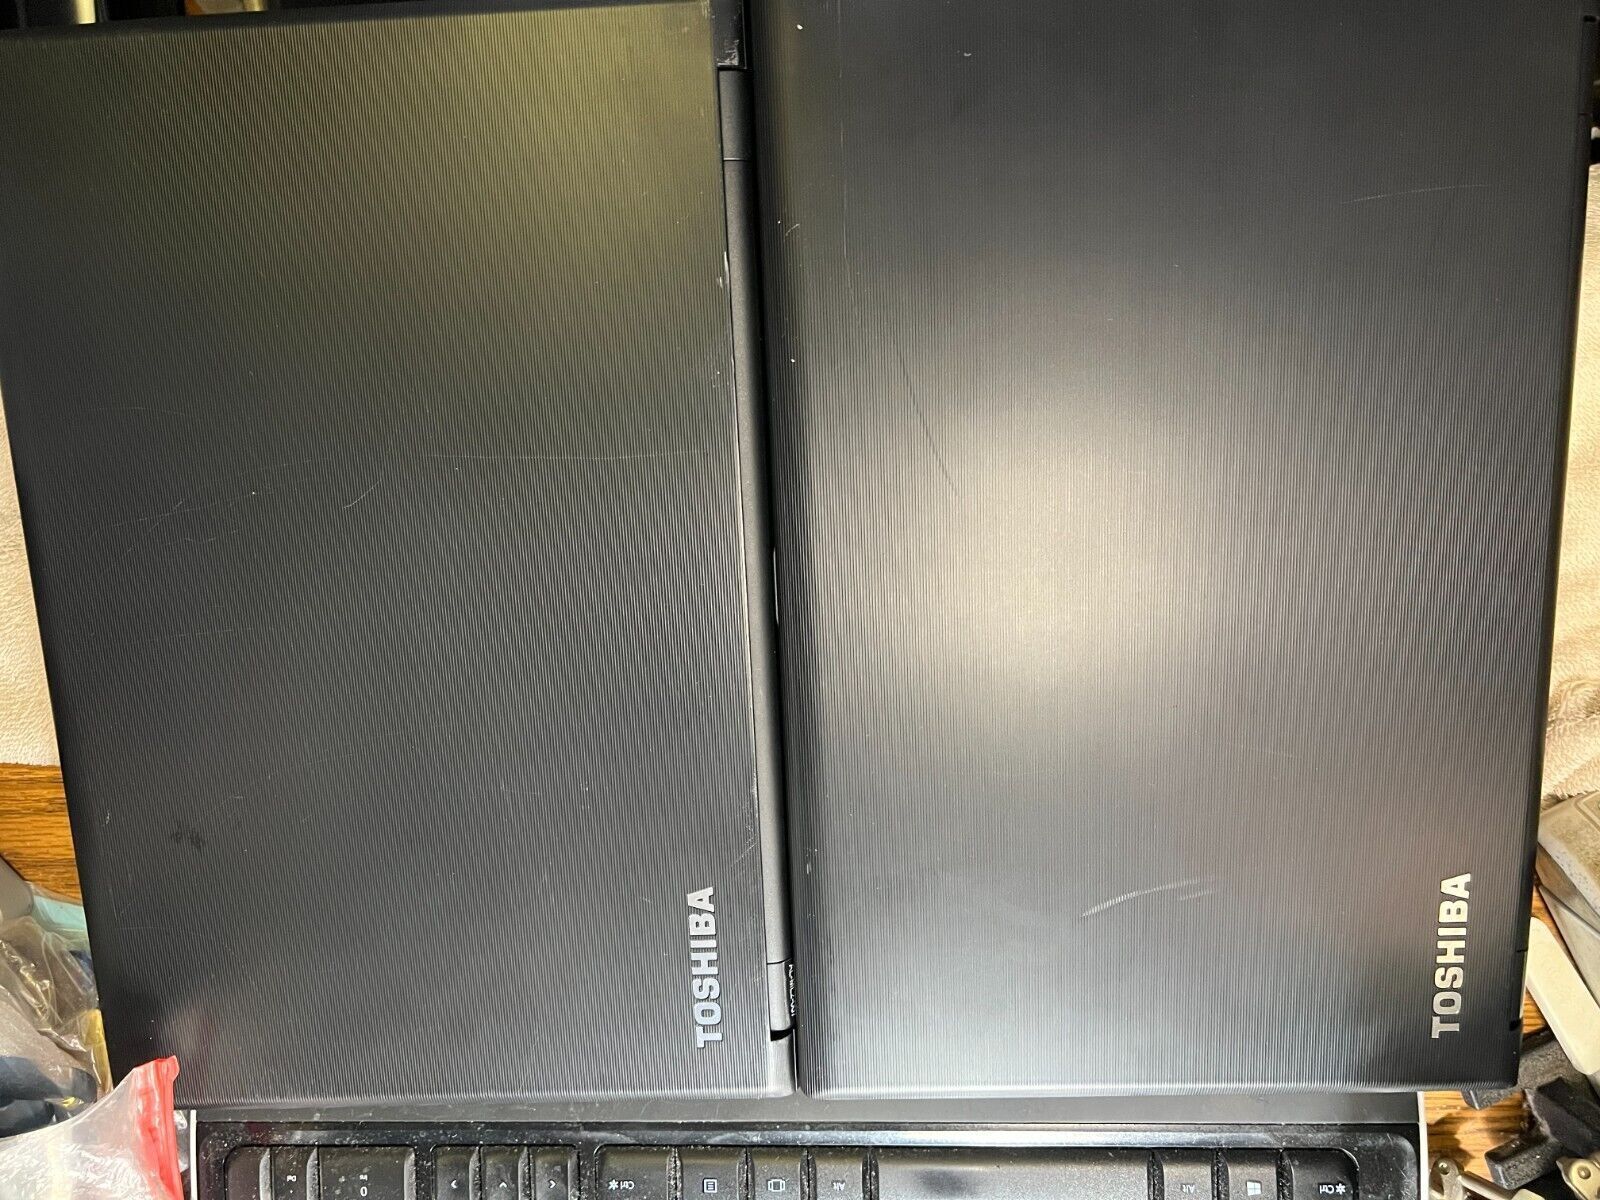 Laptop Toshiba - Intel i5 - 500 gig HD - Windows 10 Pro - 4gig Ram - #2